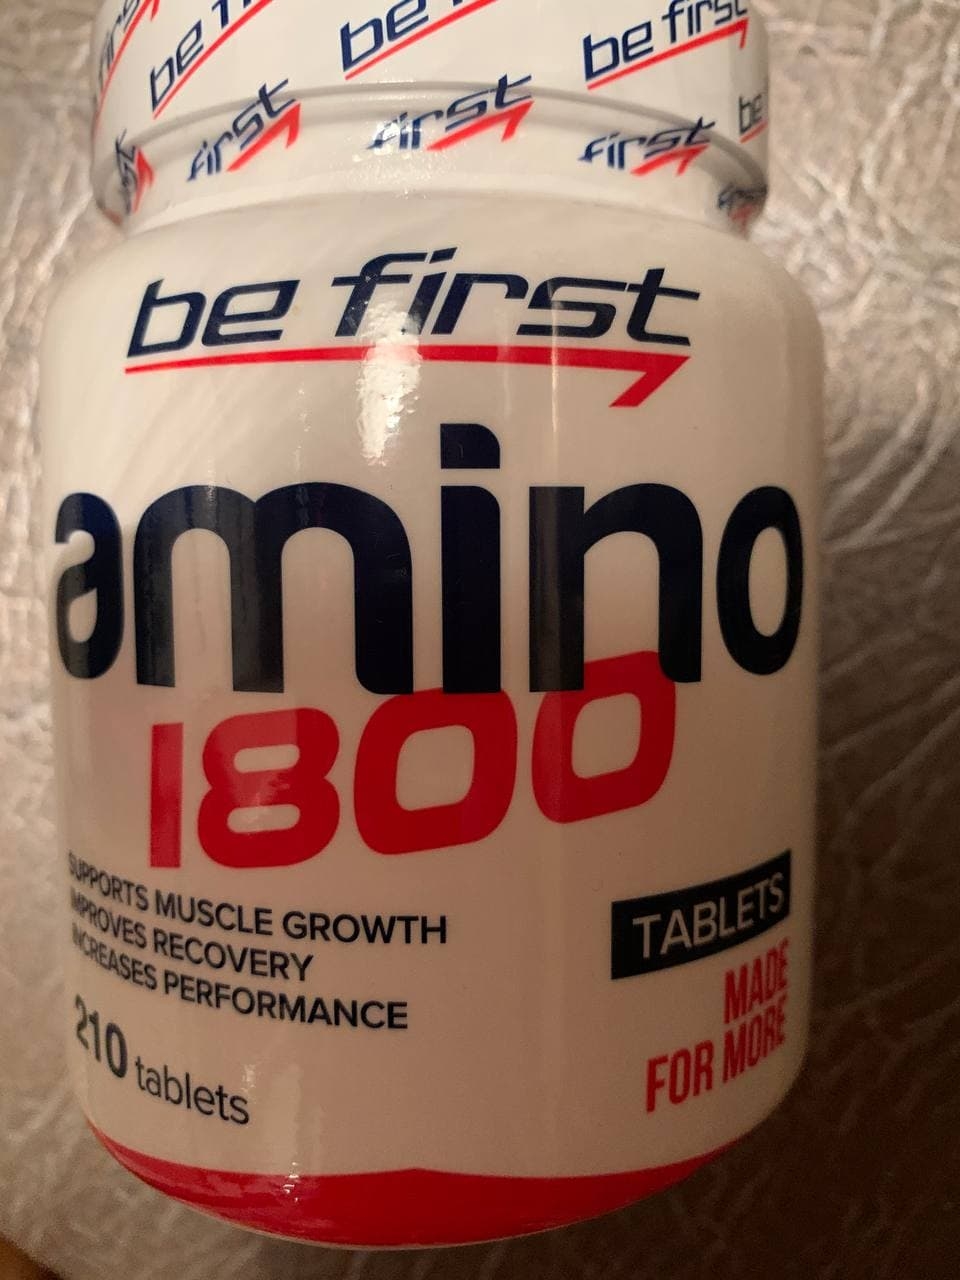 Be First Аминокислоты Amino 1800 210 таблеток - Содержит необходимые аминокислоты